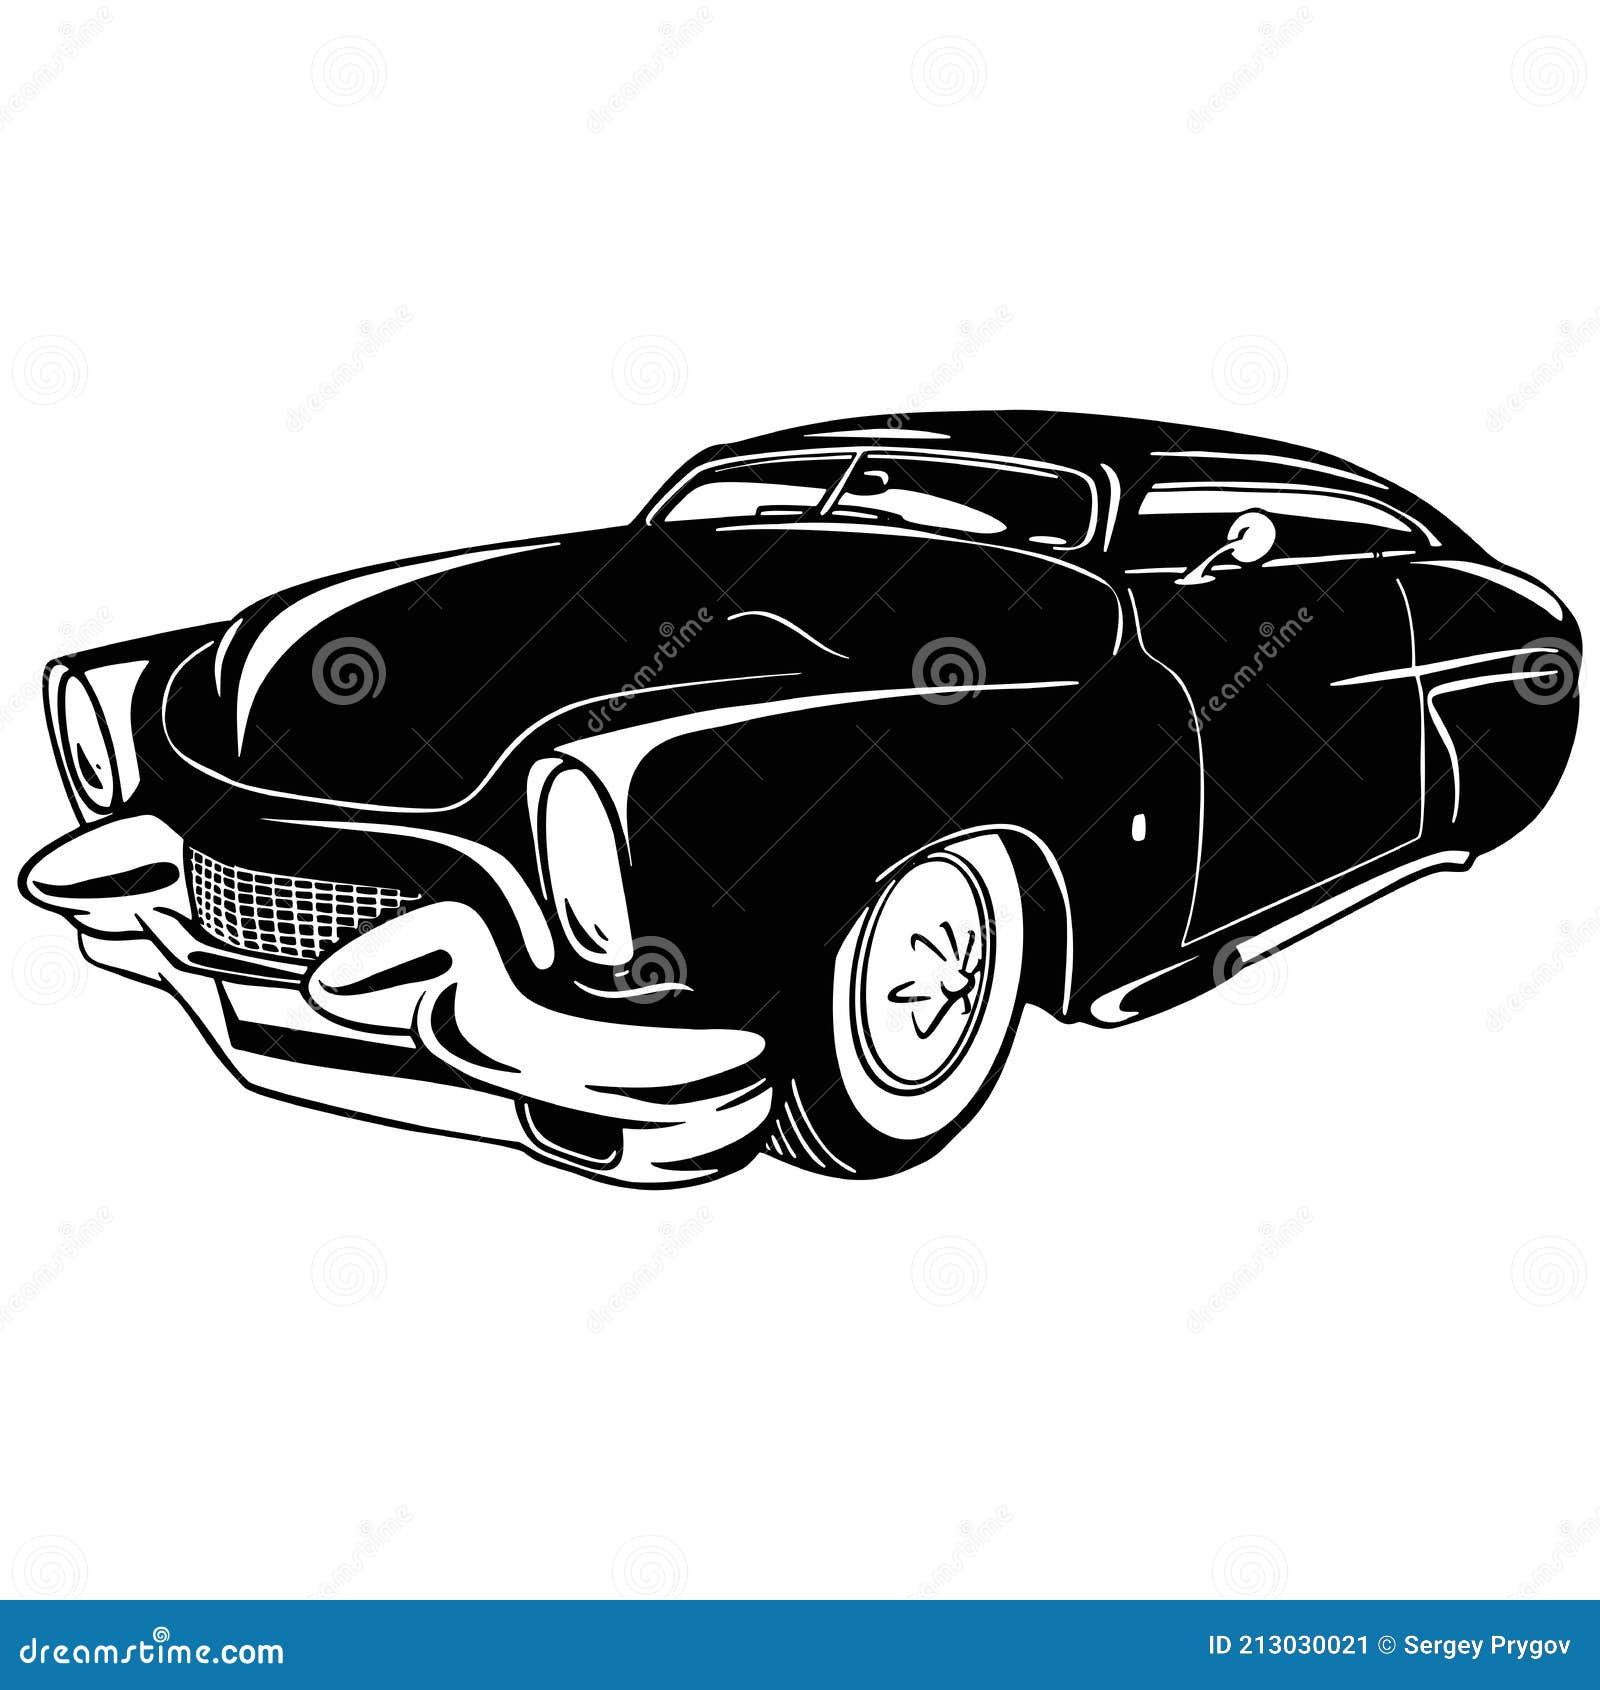 Classic Car Silhouette Stock Vector Illustration and Royalty Free Classic  Car Silhouette Clipart